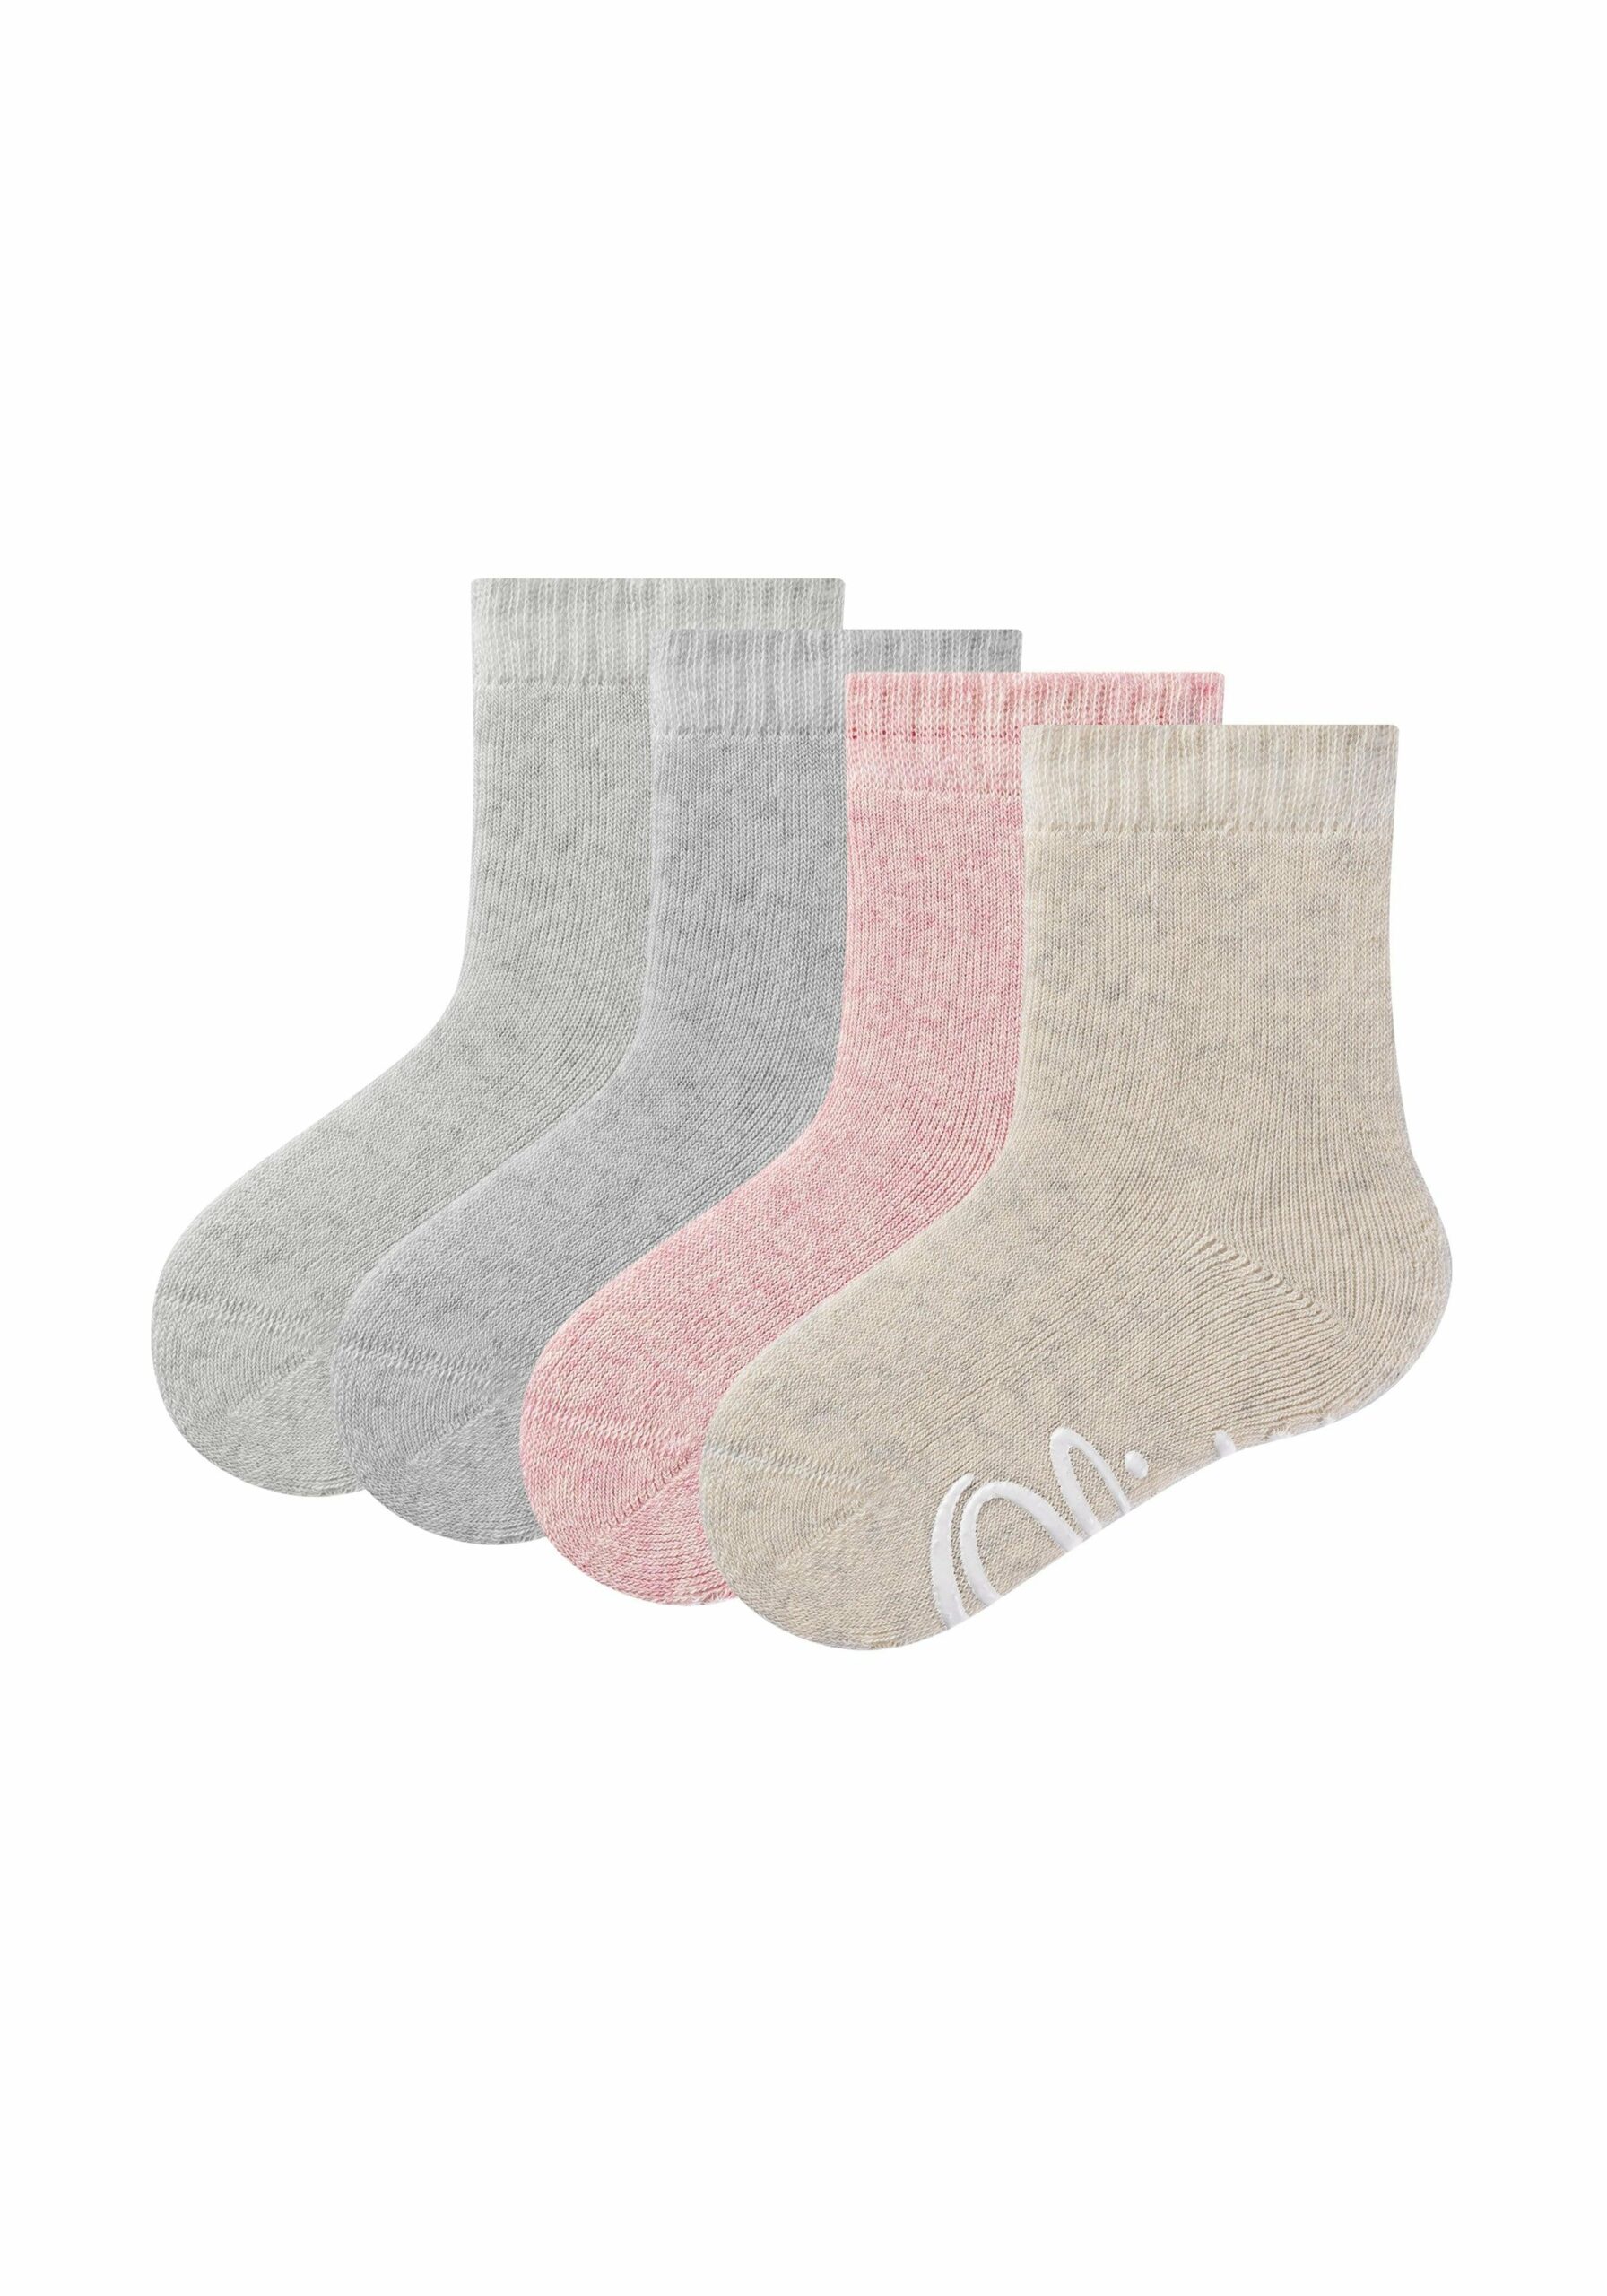 s.Oliver Kinder ABS-Socken Originals Bio-Baumwolle 4er Pack rosé melange  kaufen bei